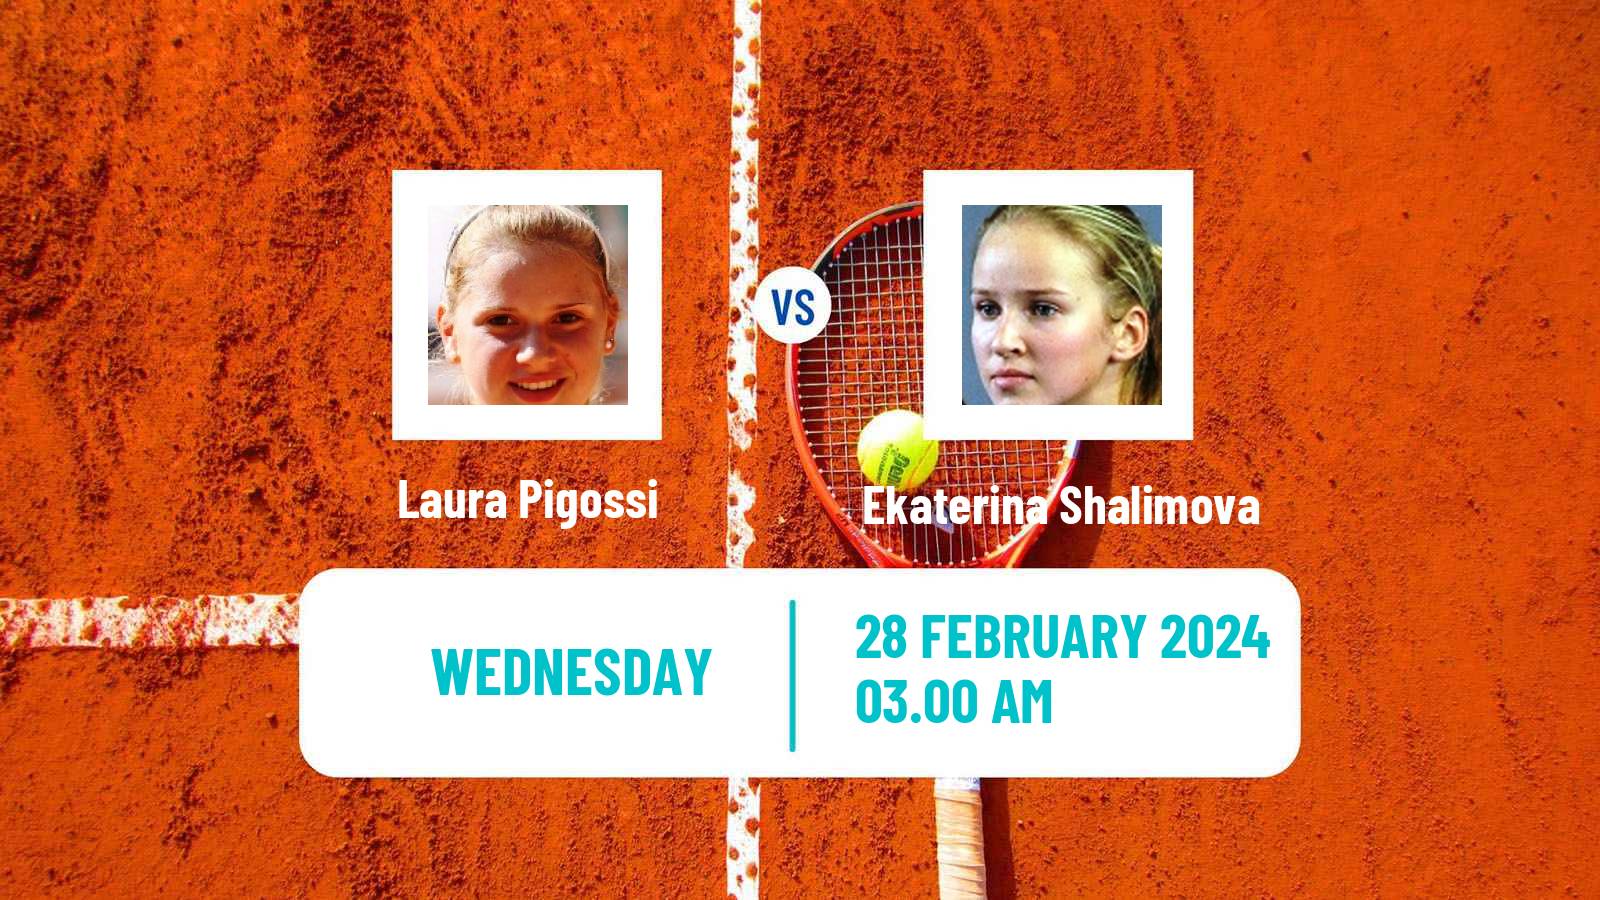 Tennis ITF W50 Pretoria 2 Women Laura Pigossi - Ekaterina Shalimova